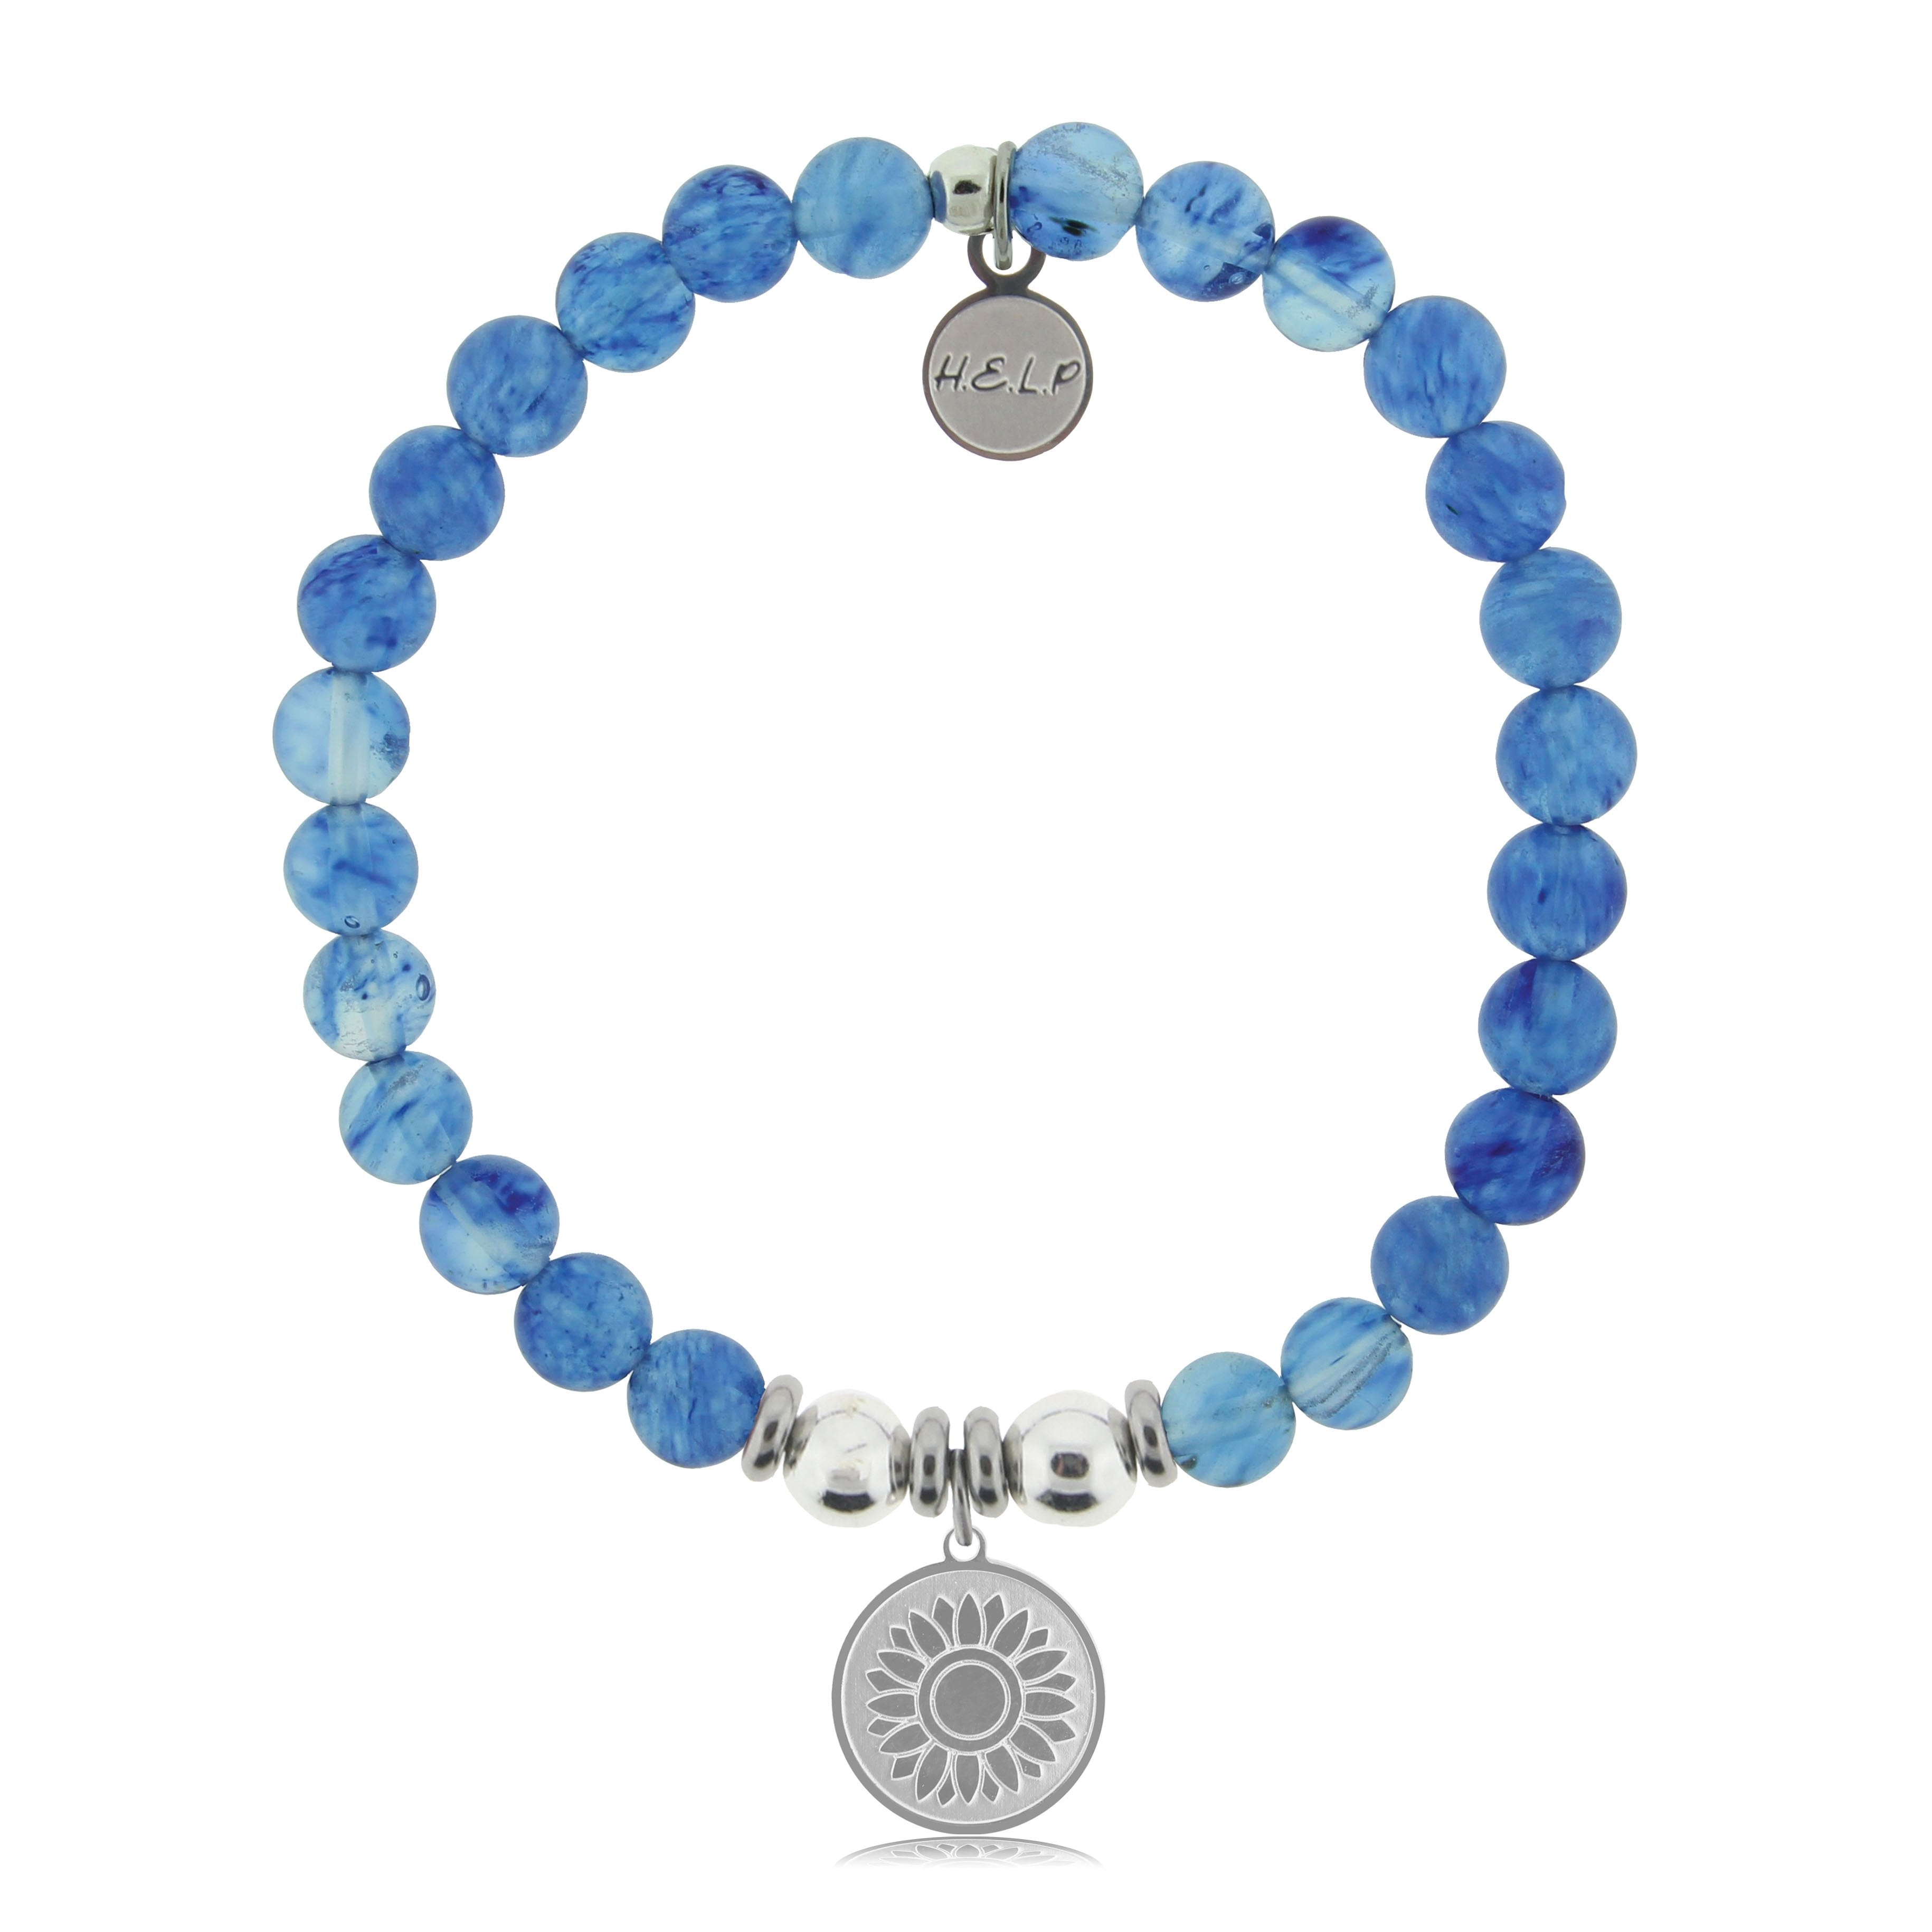 HELP by TJ Sunflower Charm with Blueberry Quartz Beads Charity Bracelet